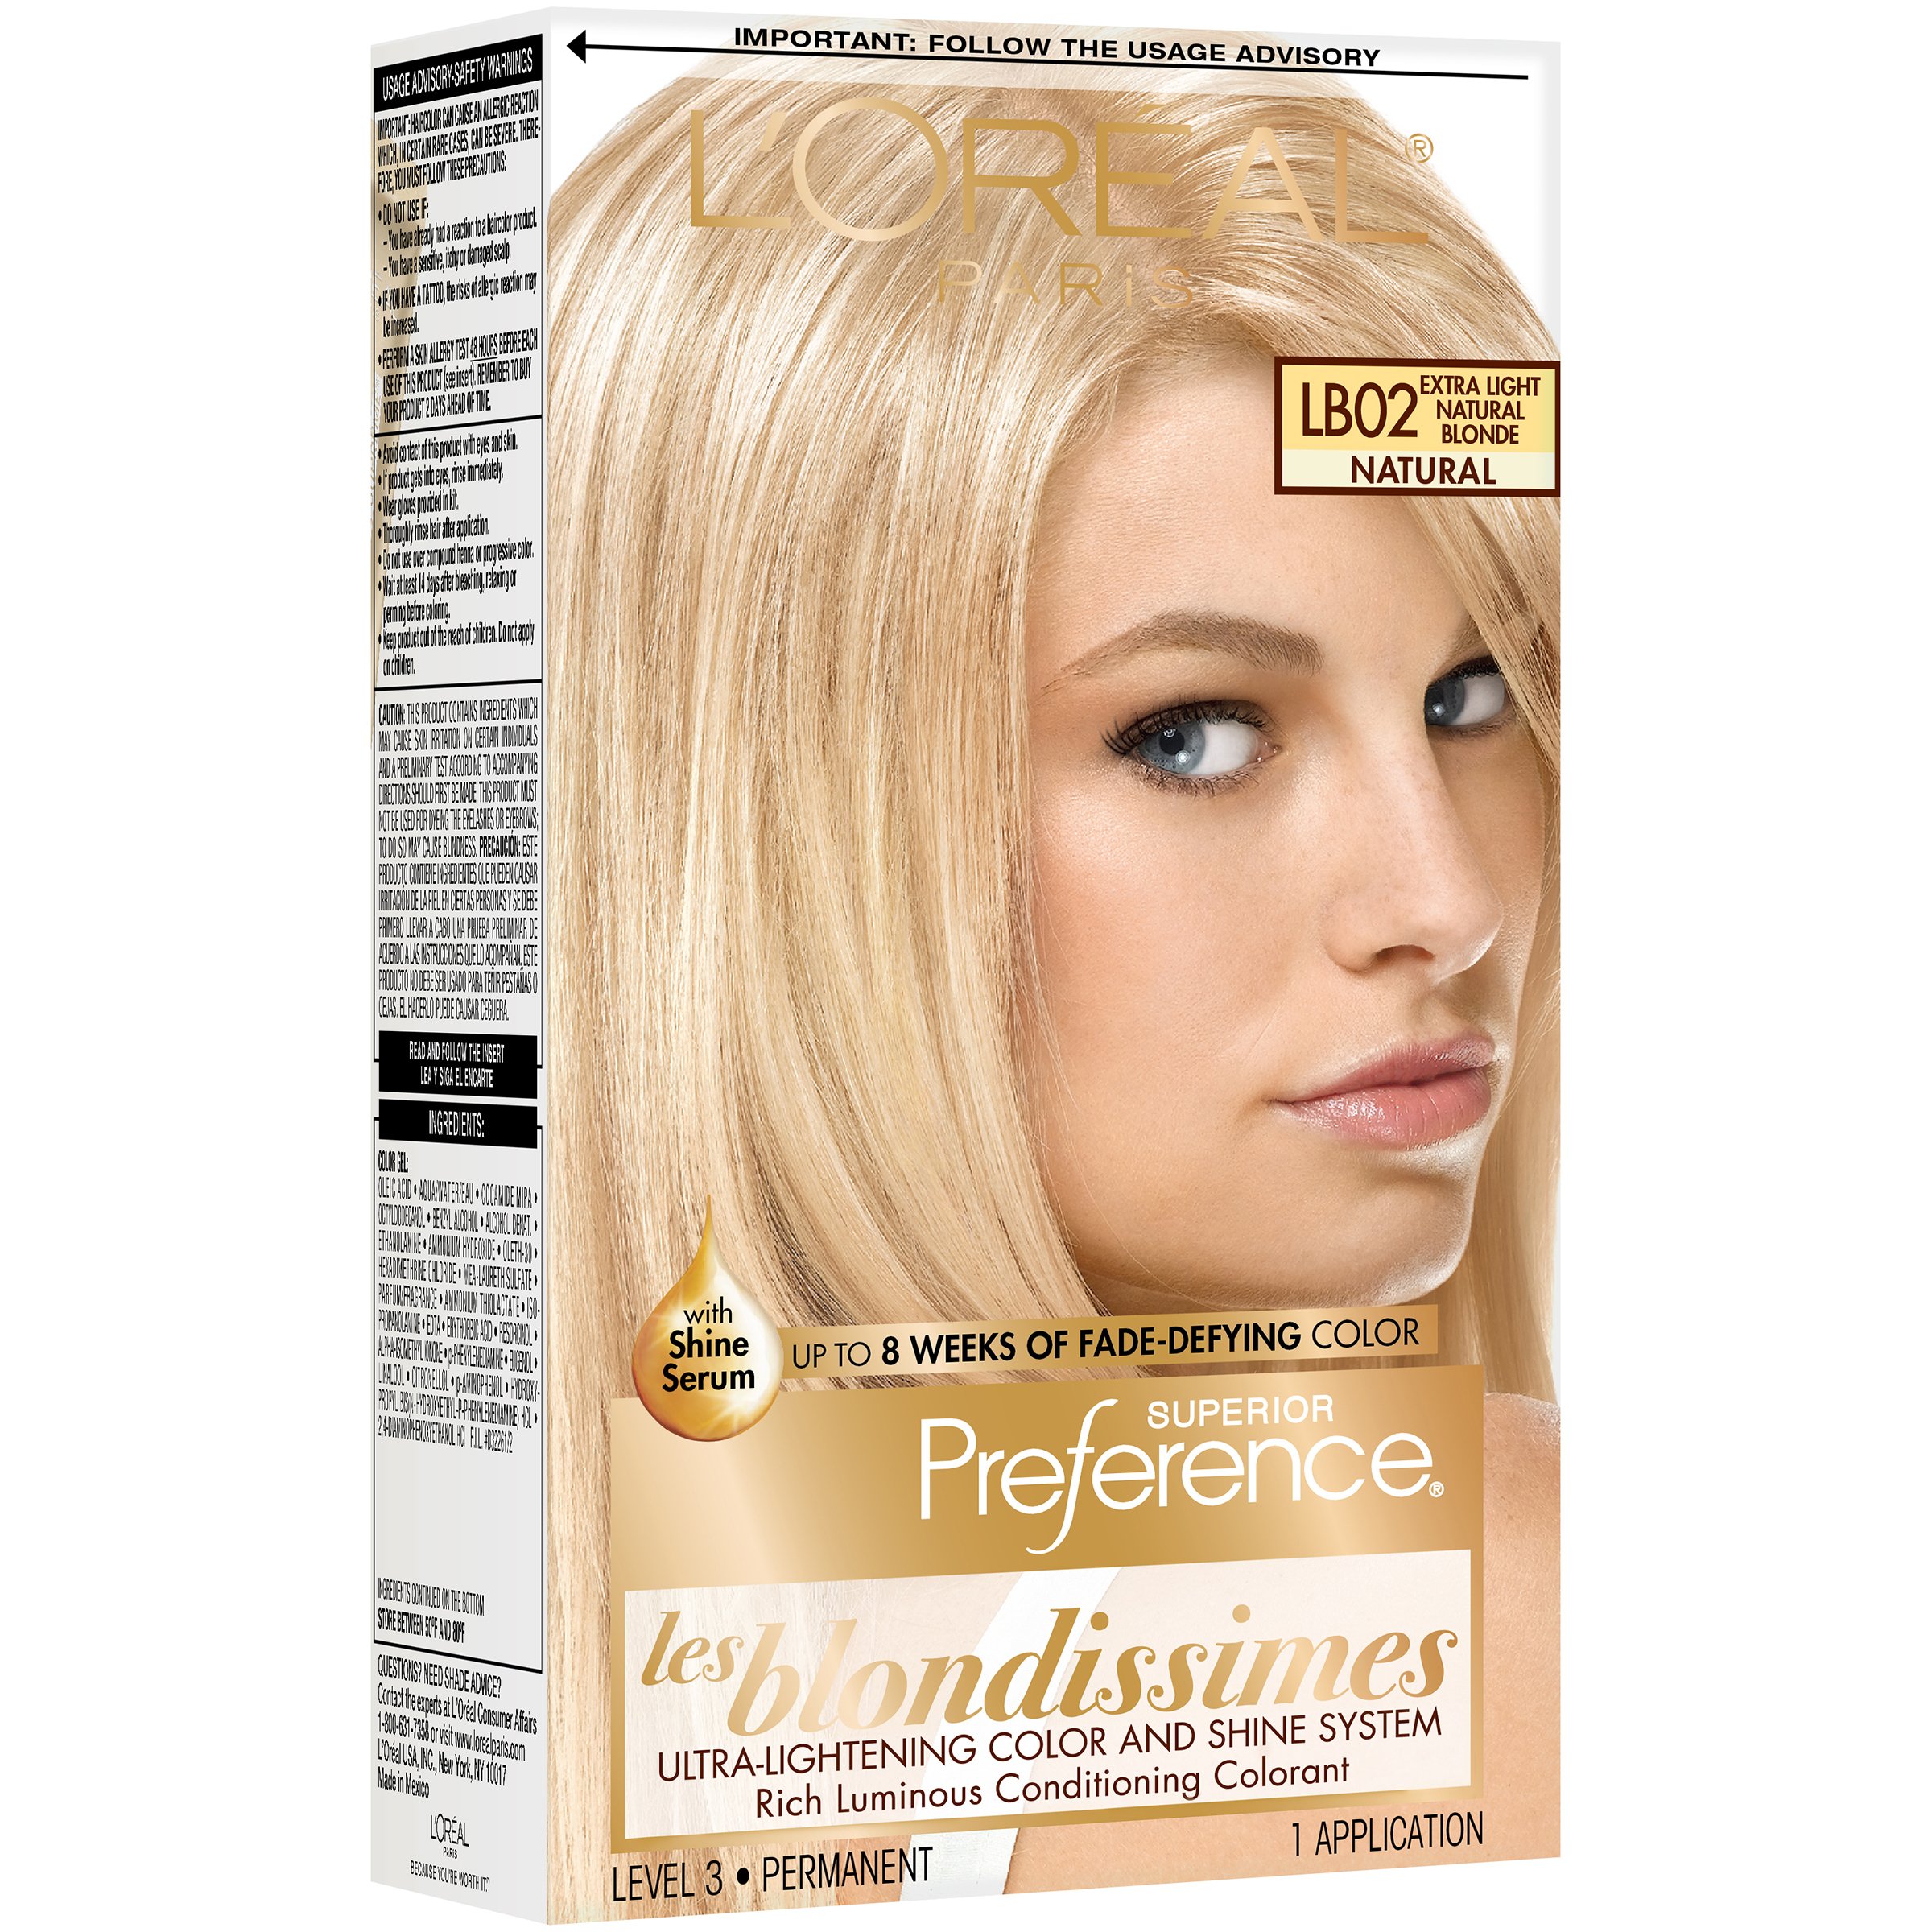 L'Oreal Paris Superior Preference Permanent Hair Color, LB02 Extra